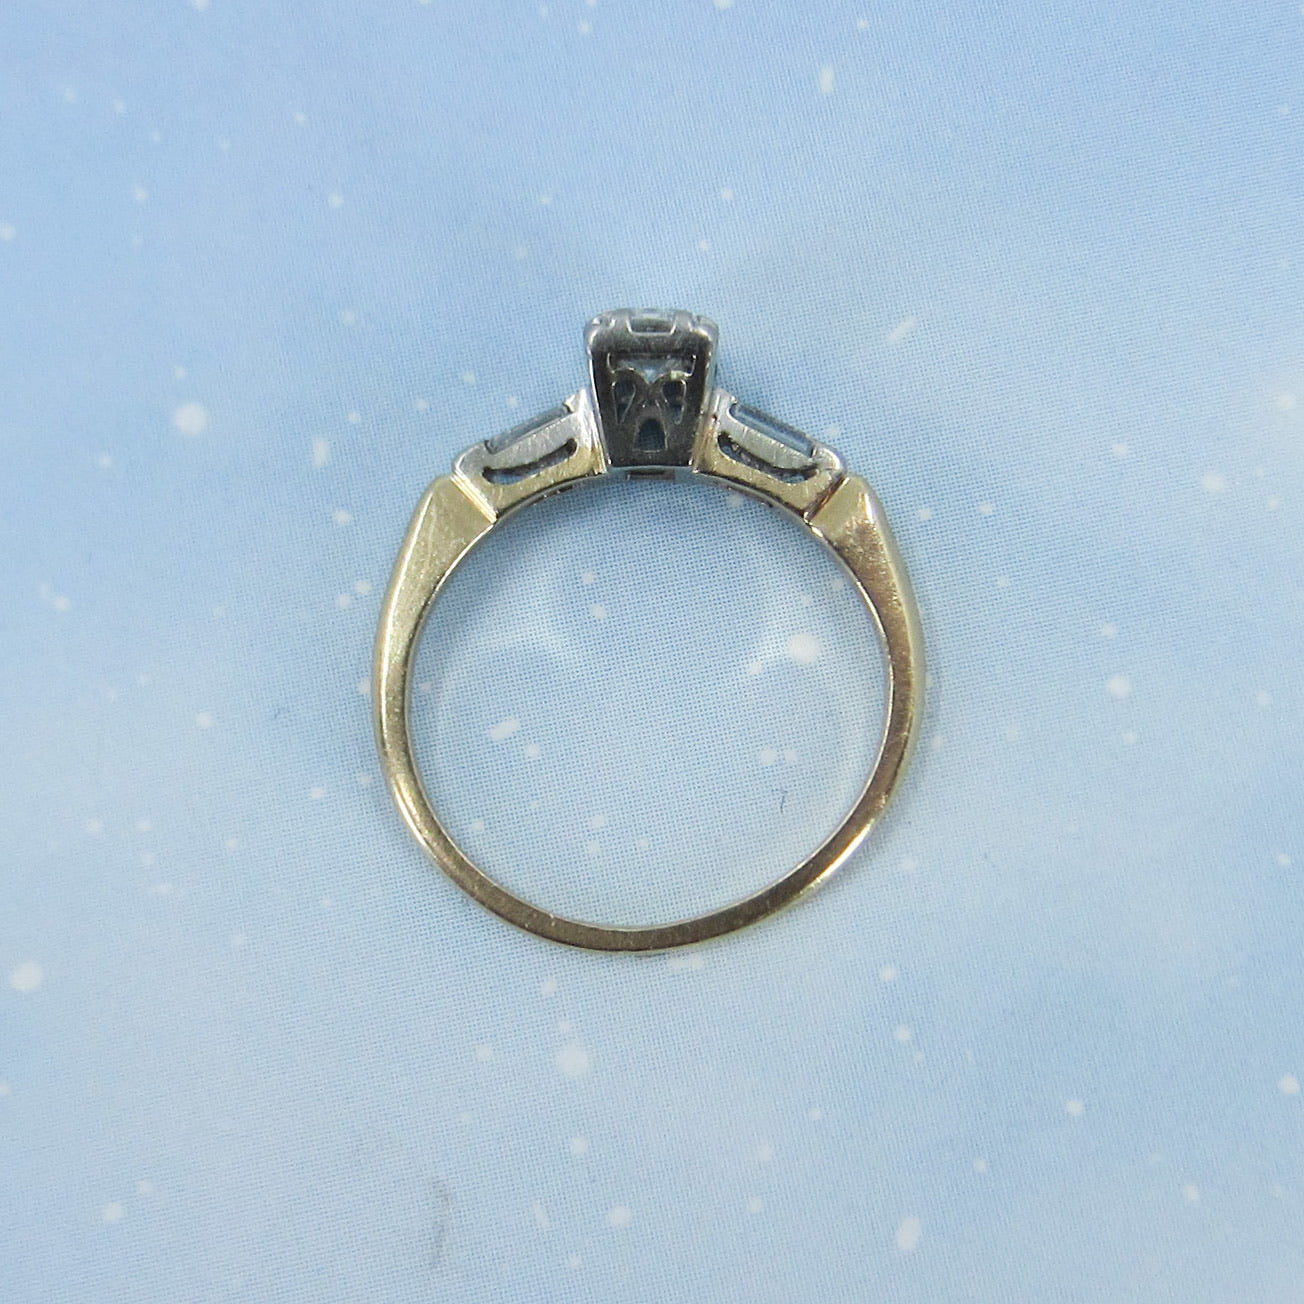 SOLD--Vintage Emerald Cut Diamond Engagement Ring Plat/14k c. 1940